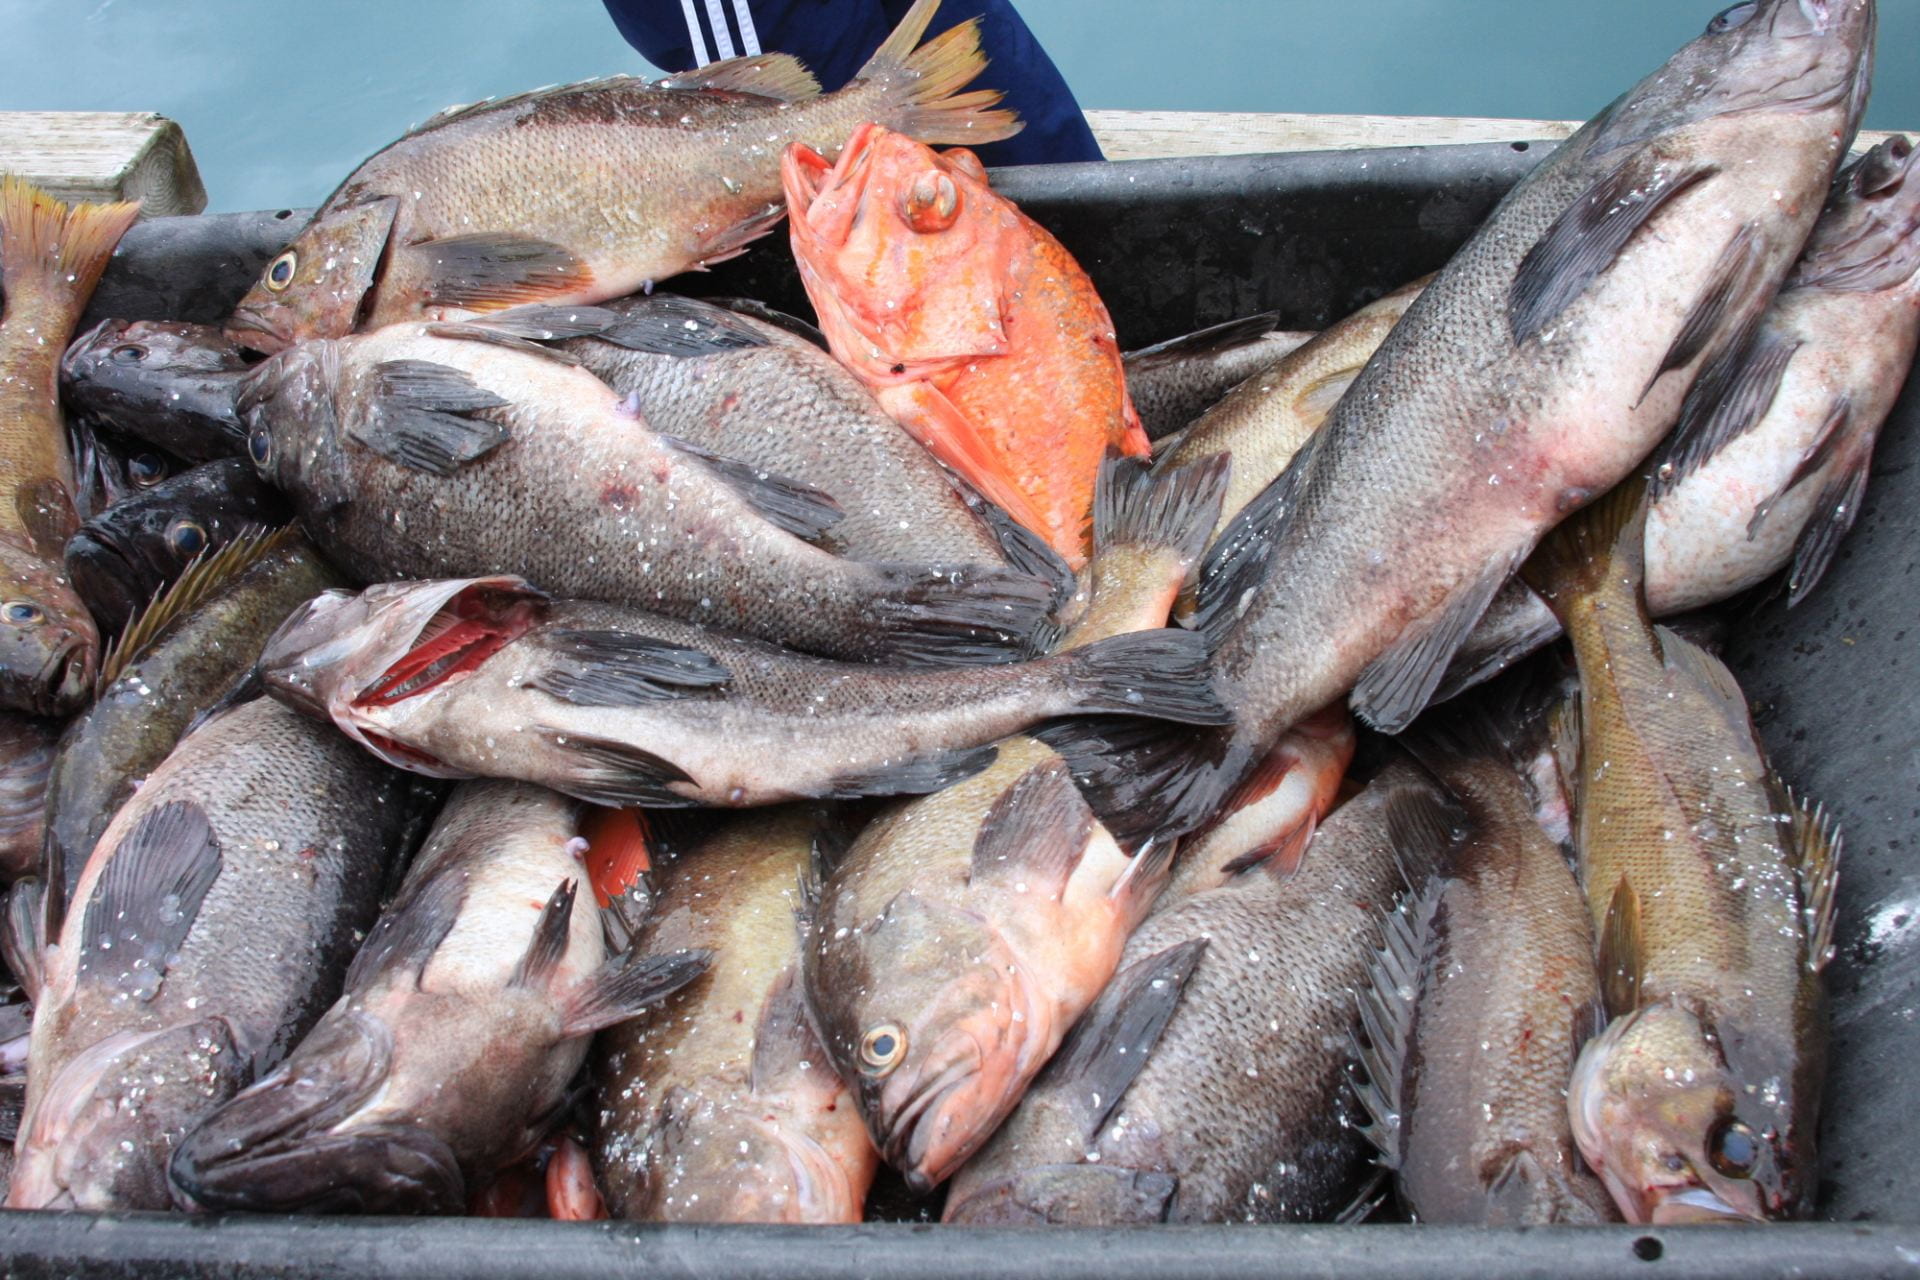 Just-caught silvery-brown fish on the dock in Seward, Alaska